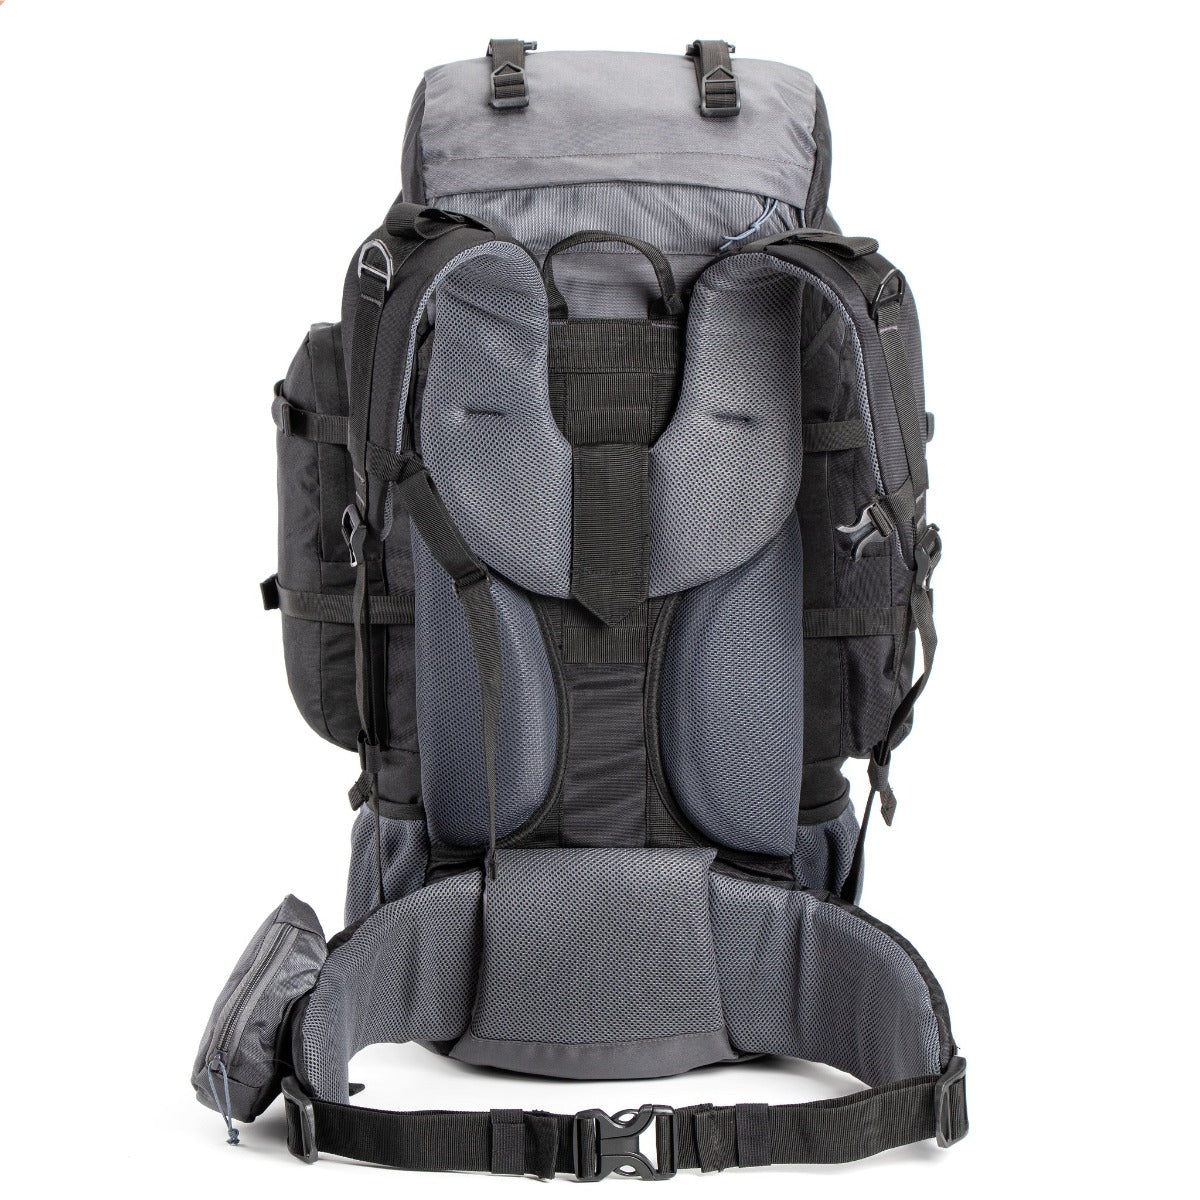 Walker Trekking and Backpacking Rucksack - 65 Litre - Black & Grey 2